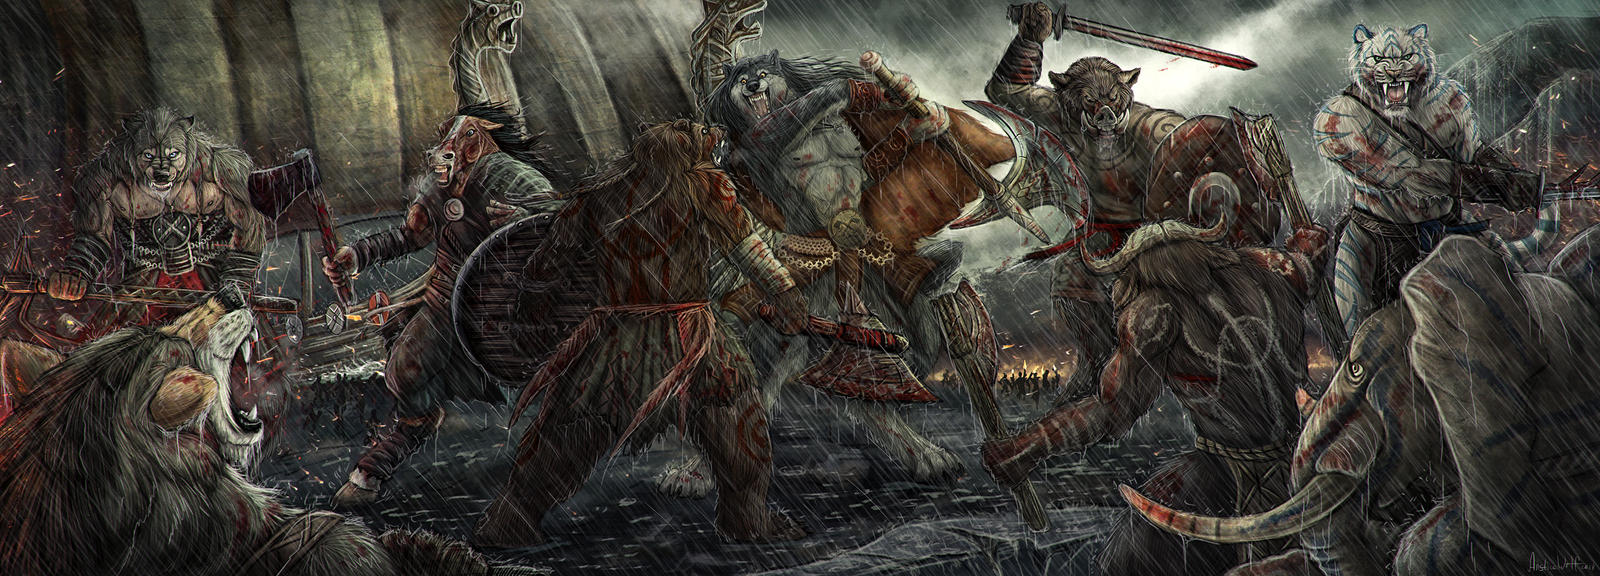 Vikings battle by AnsticeWolf on DeviantArt